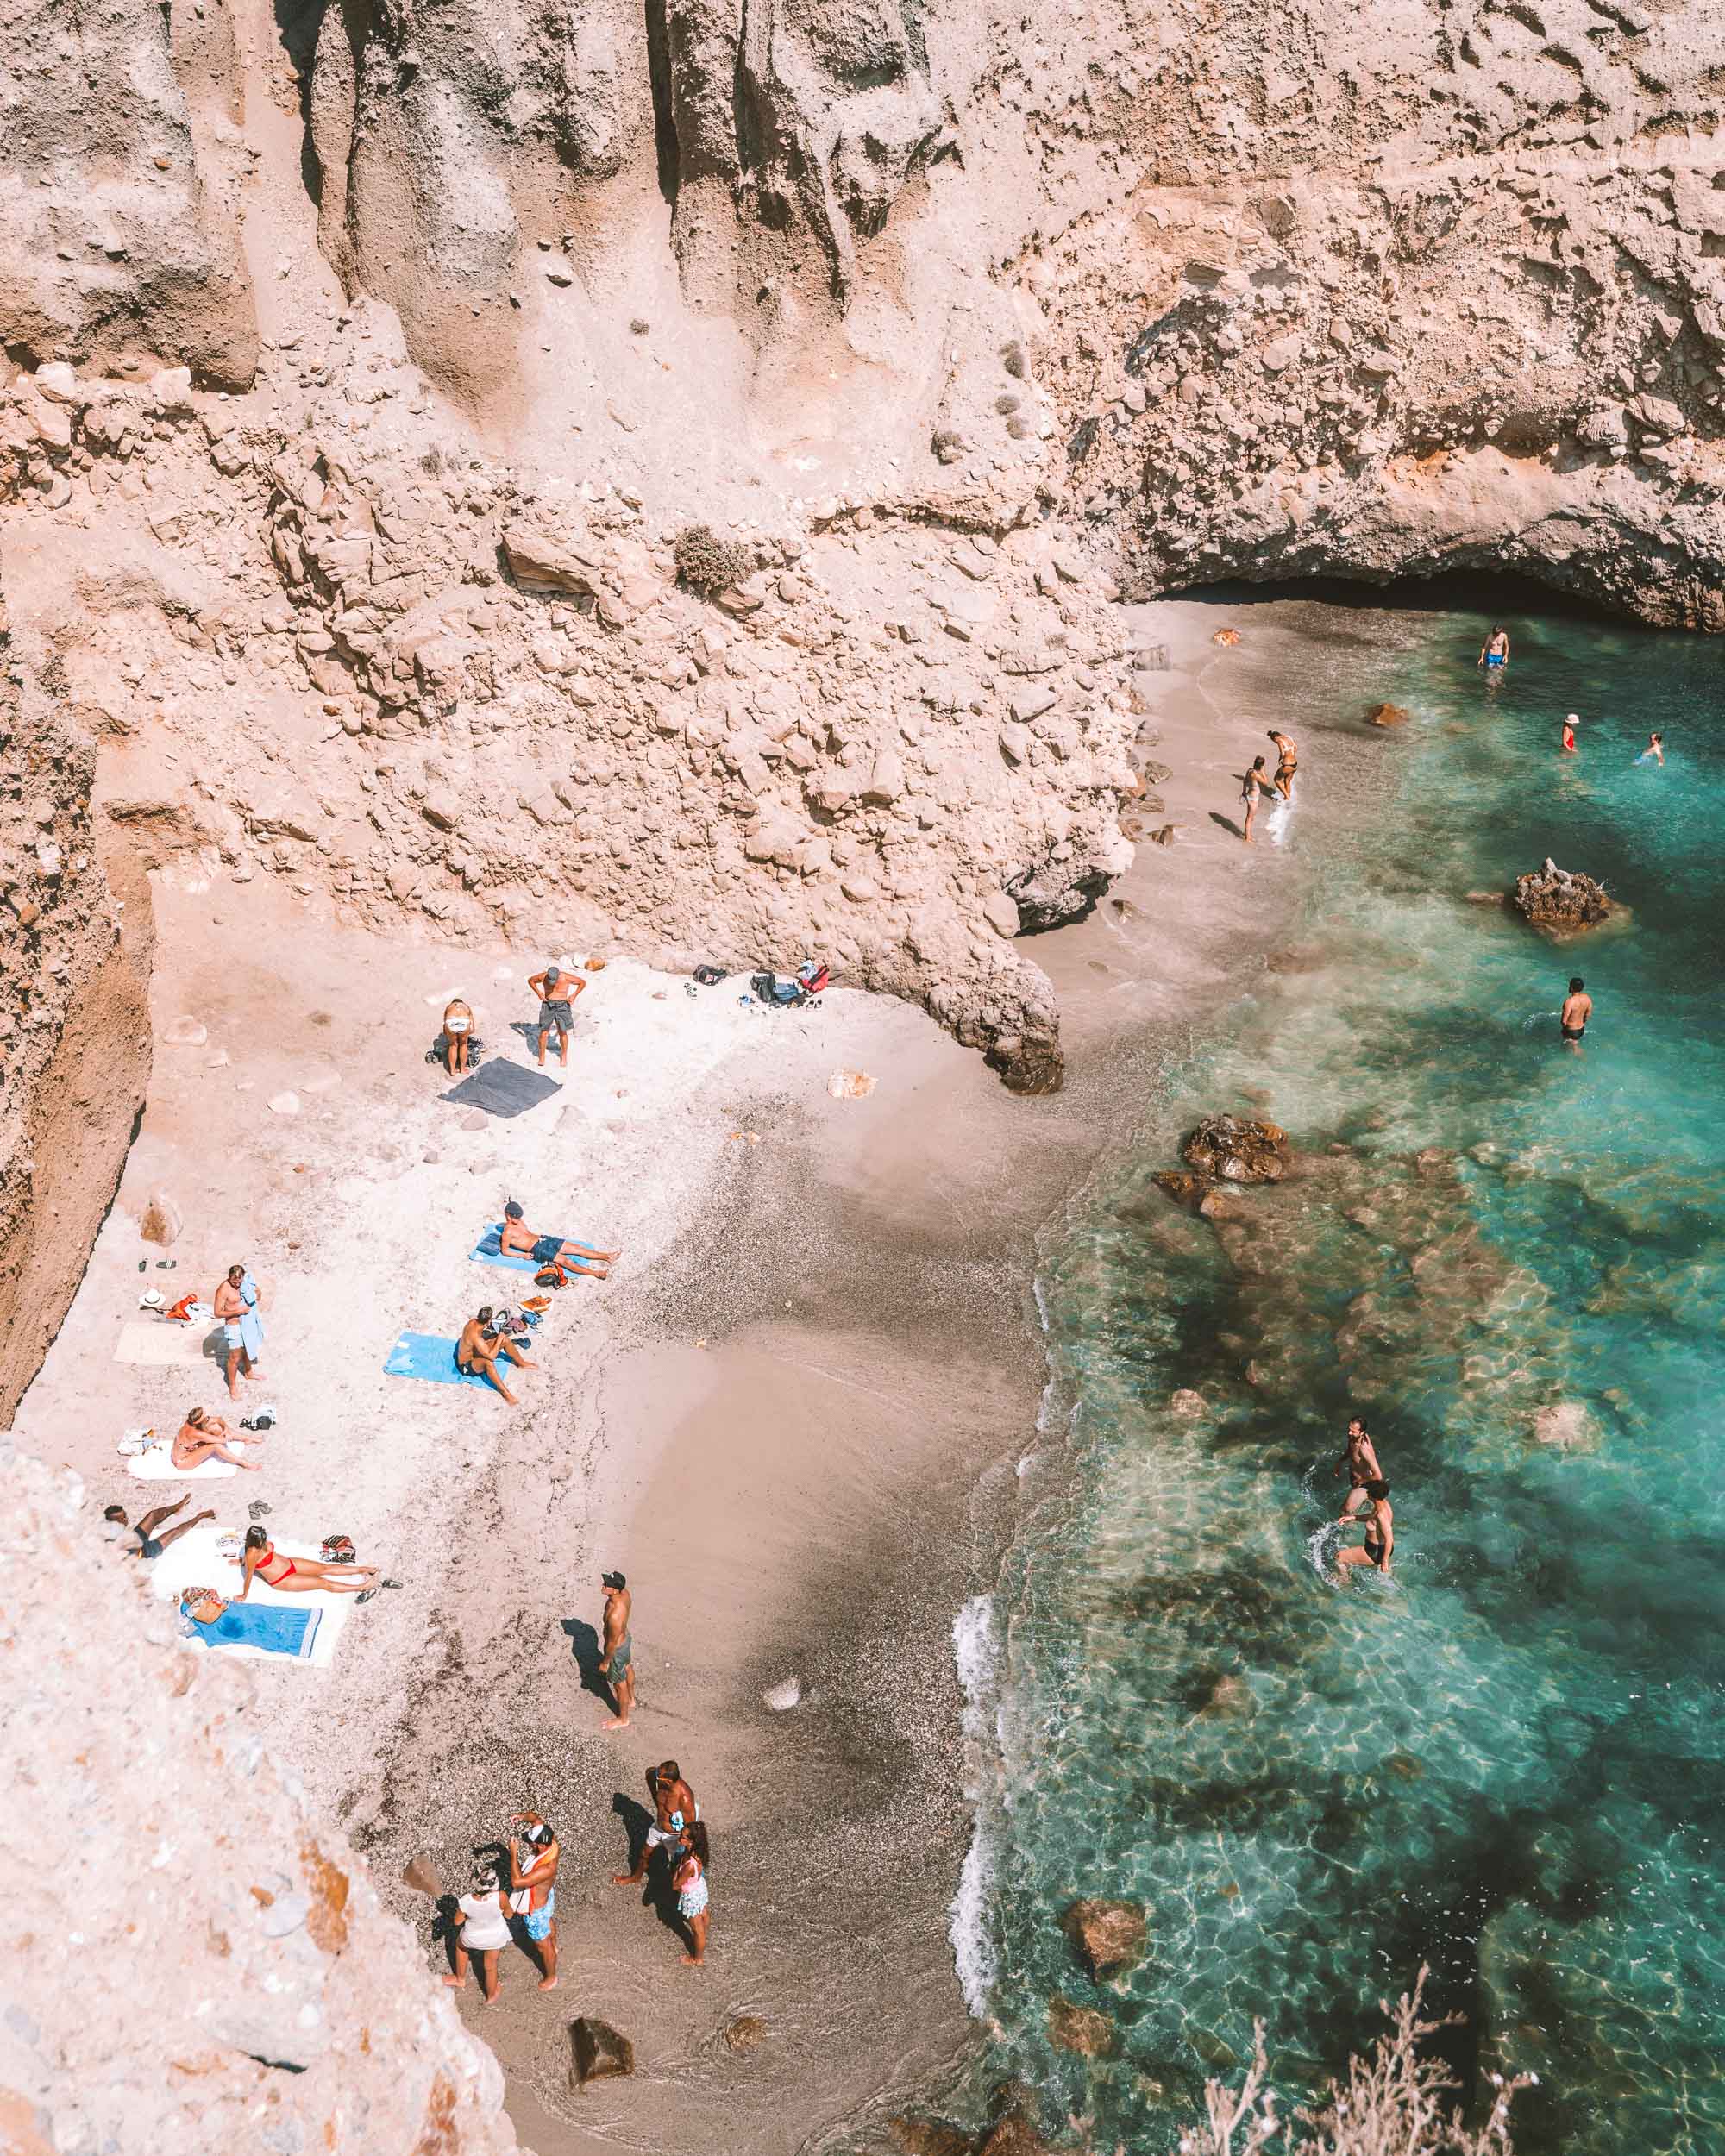 One of the best greek islands to visit - Milos via @finduslost